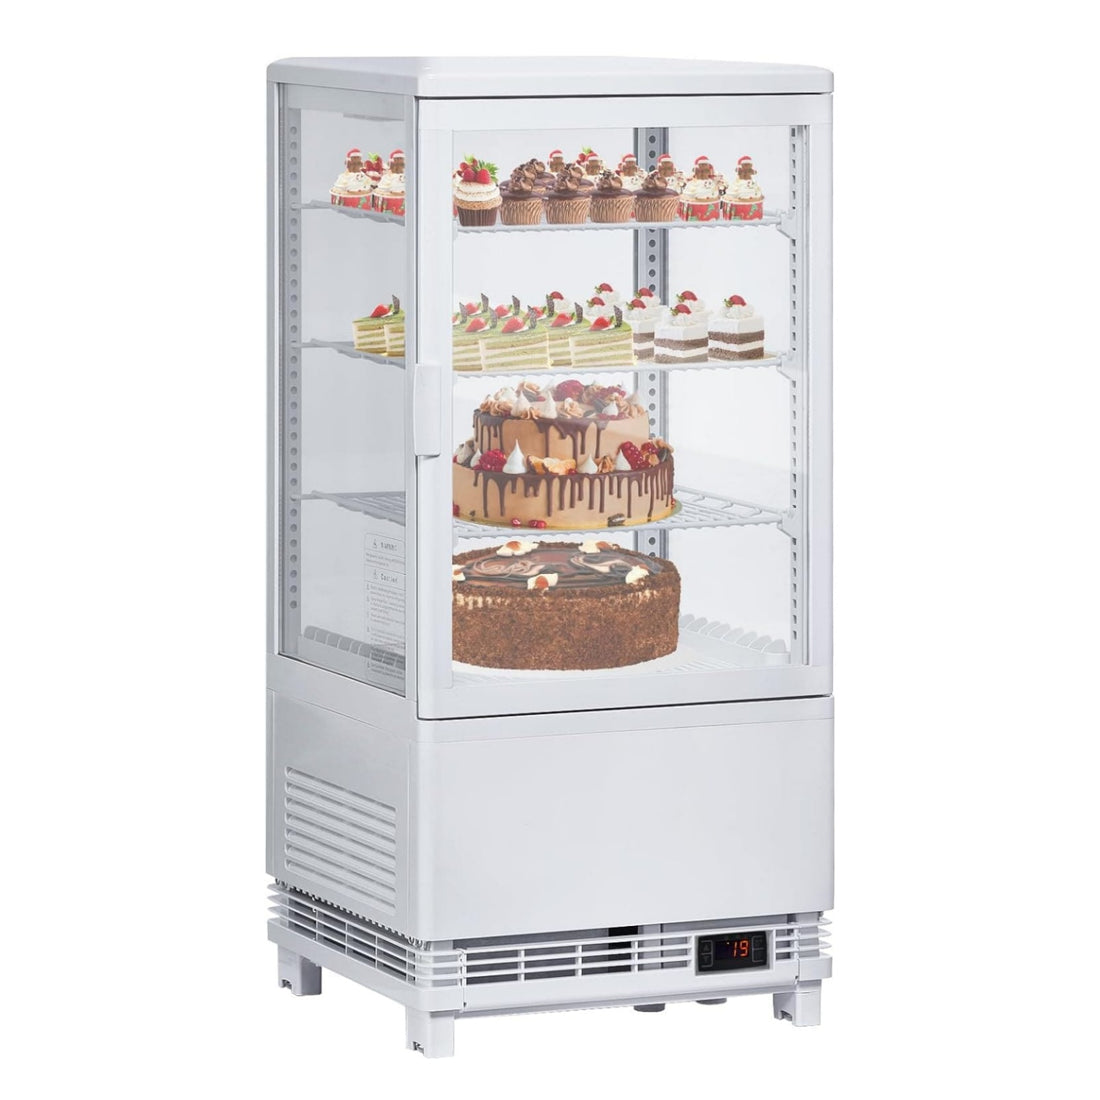 Commercial Cake Display Refrigerator, 110v 2.8 Cu.FT Single-Door Merchandiser with Interior LED Lighting, Double-Layered Glass, Countertop/Floor Refrigerator